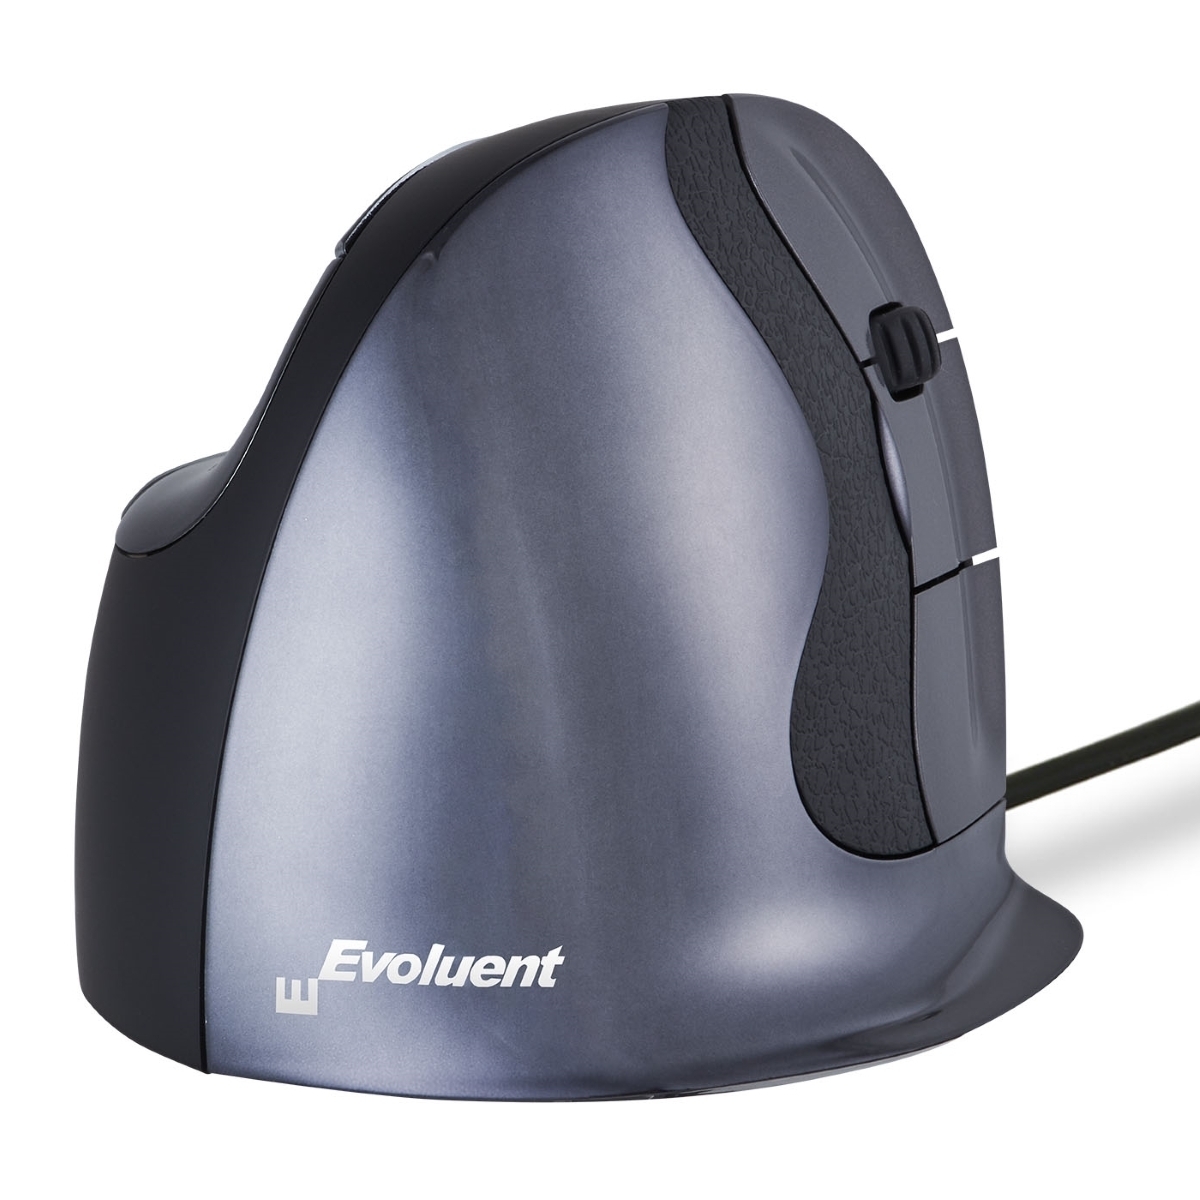 Evoluent Vertical D Small Maus [Ergonomisch Vertikal, Kabelgebunden, USB-A, Laser, 3.200 DPI, USB-A, Rechte Hand] von Evoluent